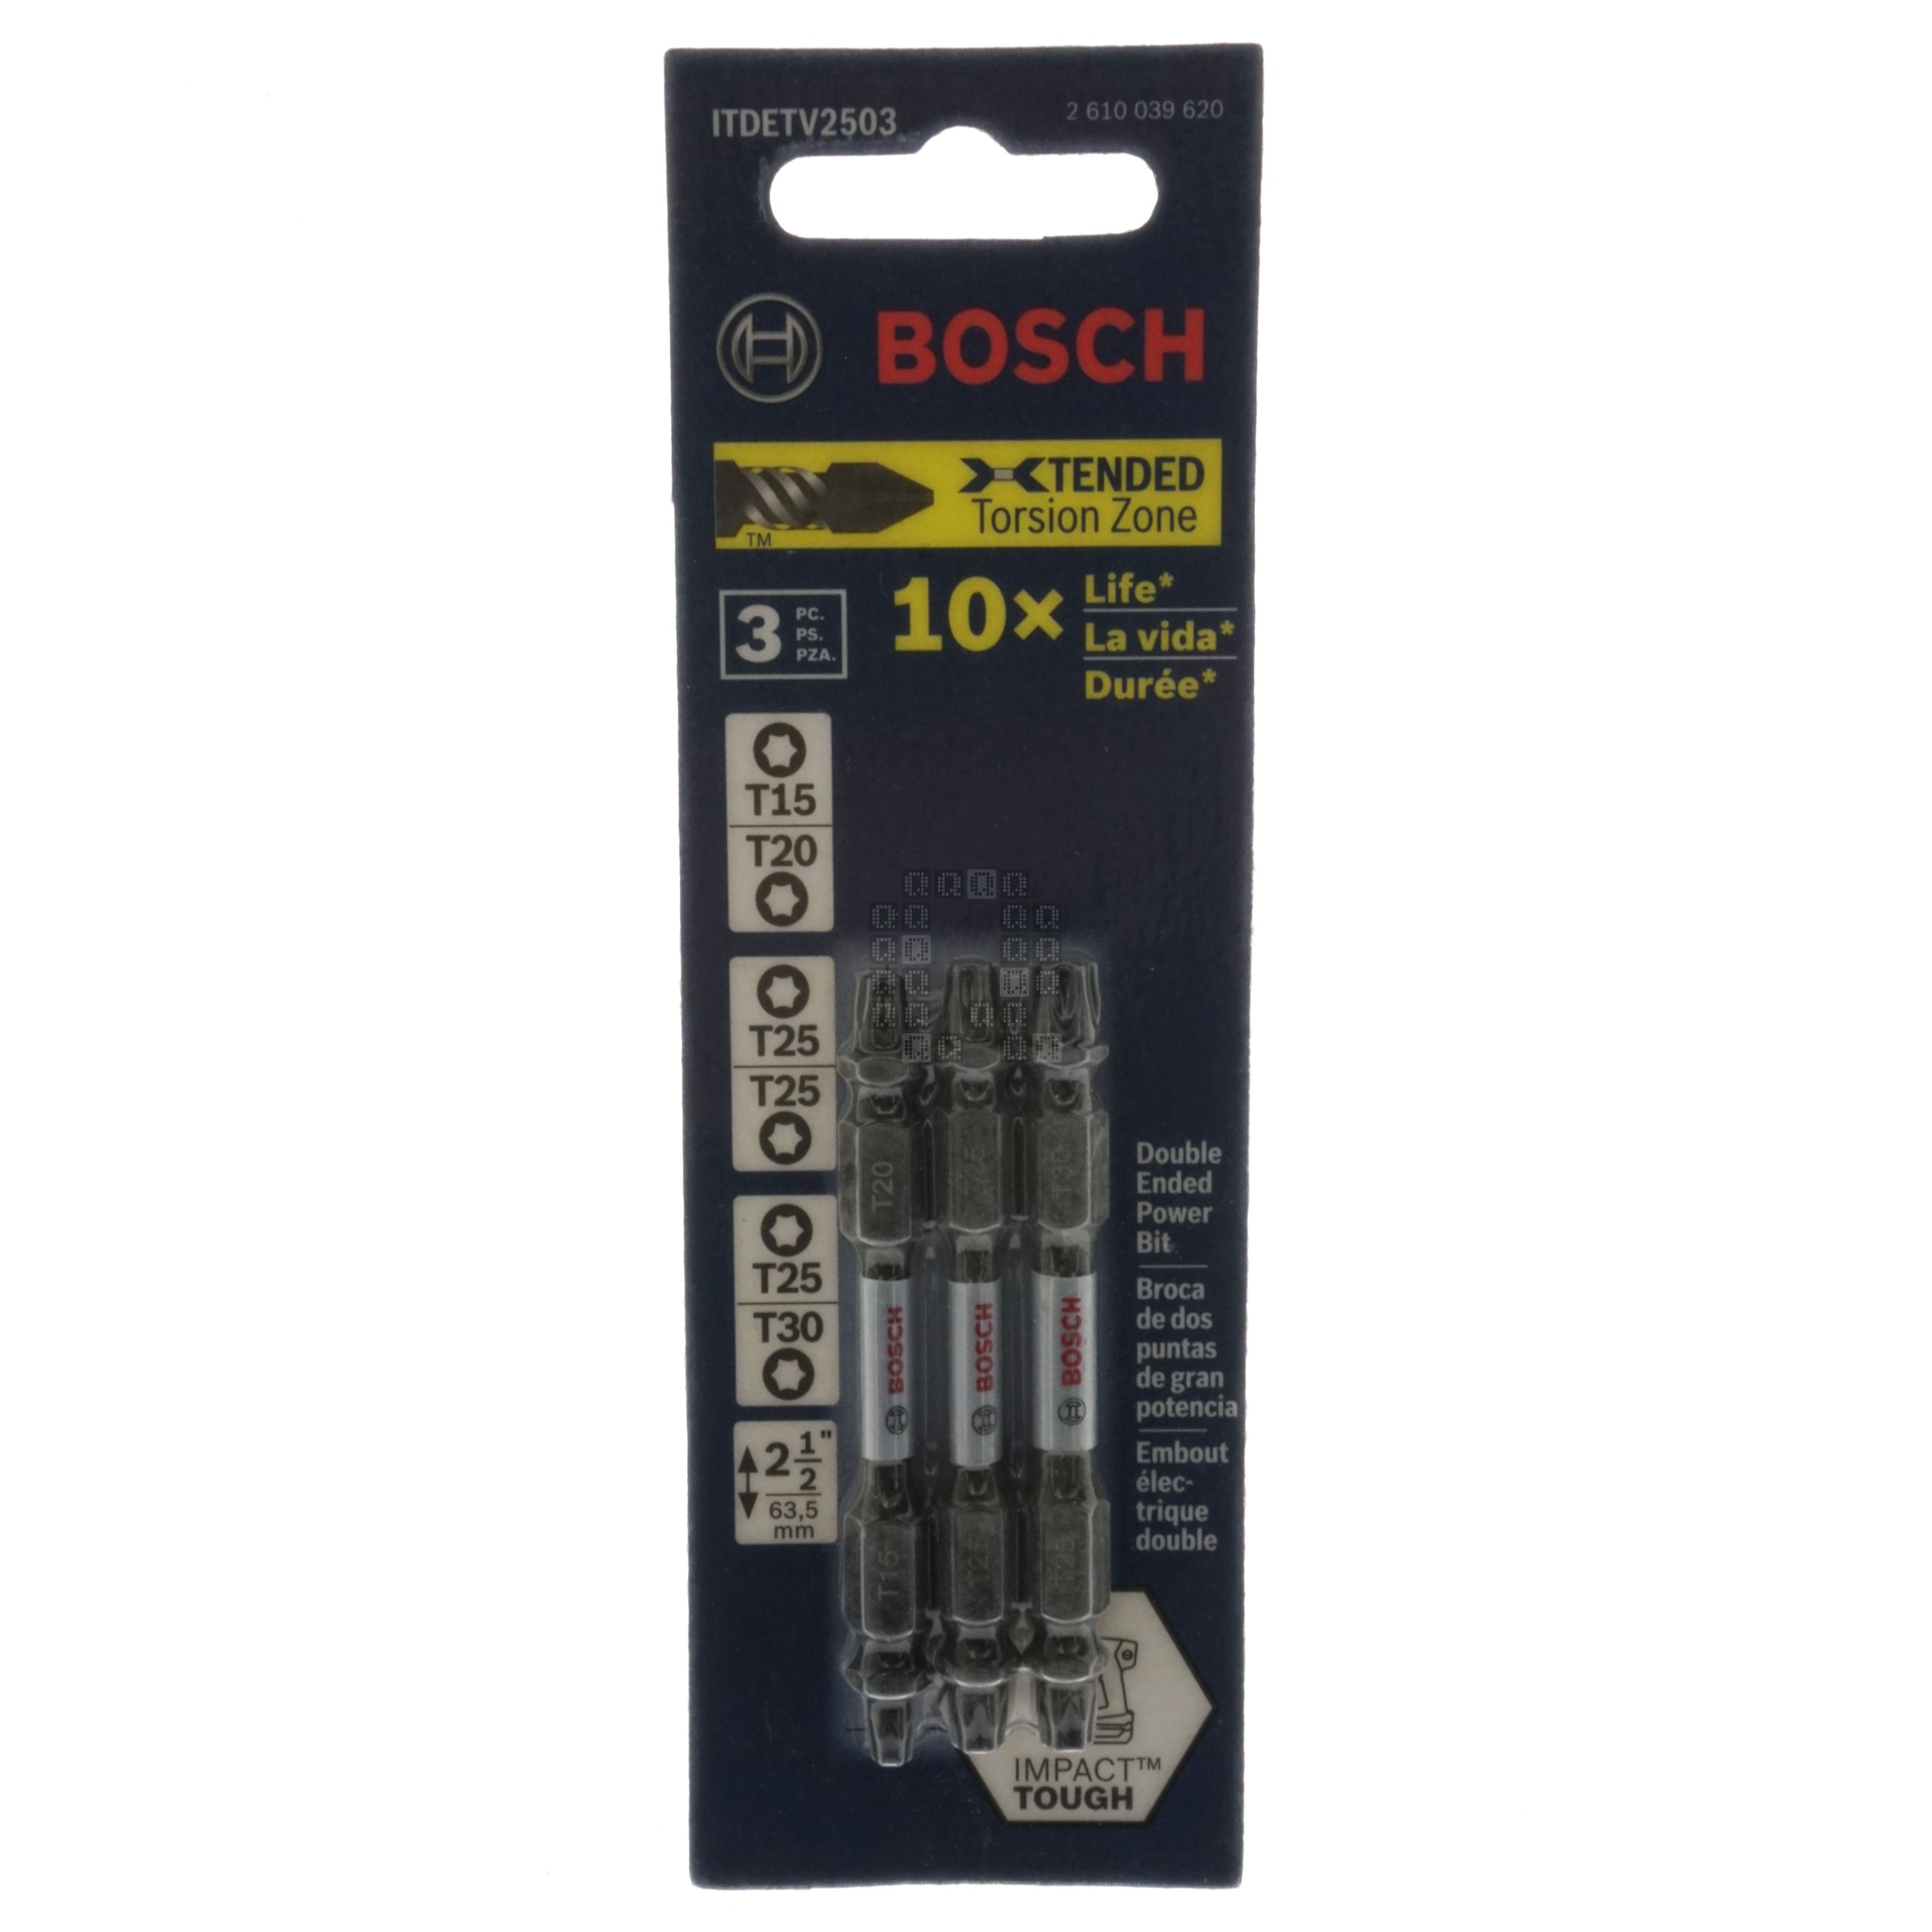 Bosch ITDETV2503 2610039620 Impact Tough Double Ended Power Bit, 2.5" Length